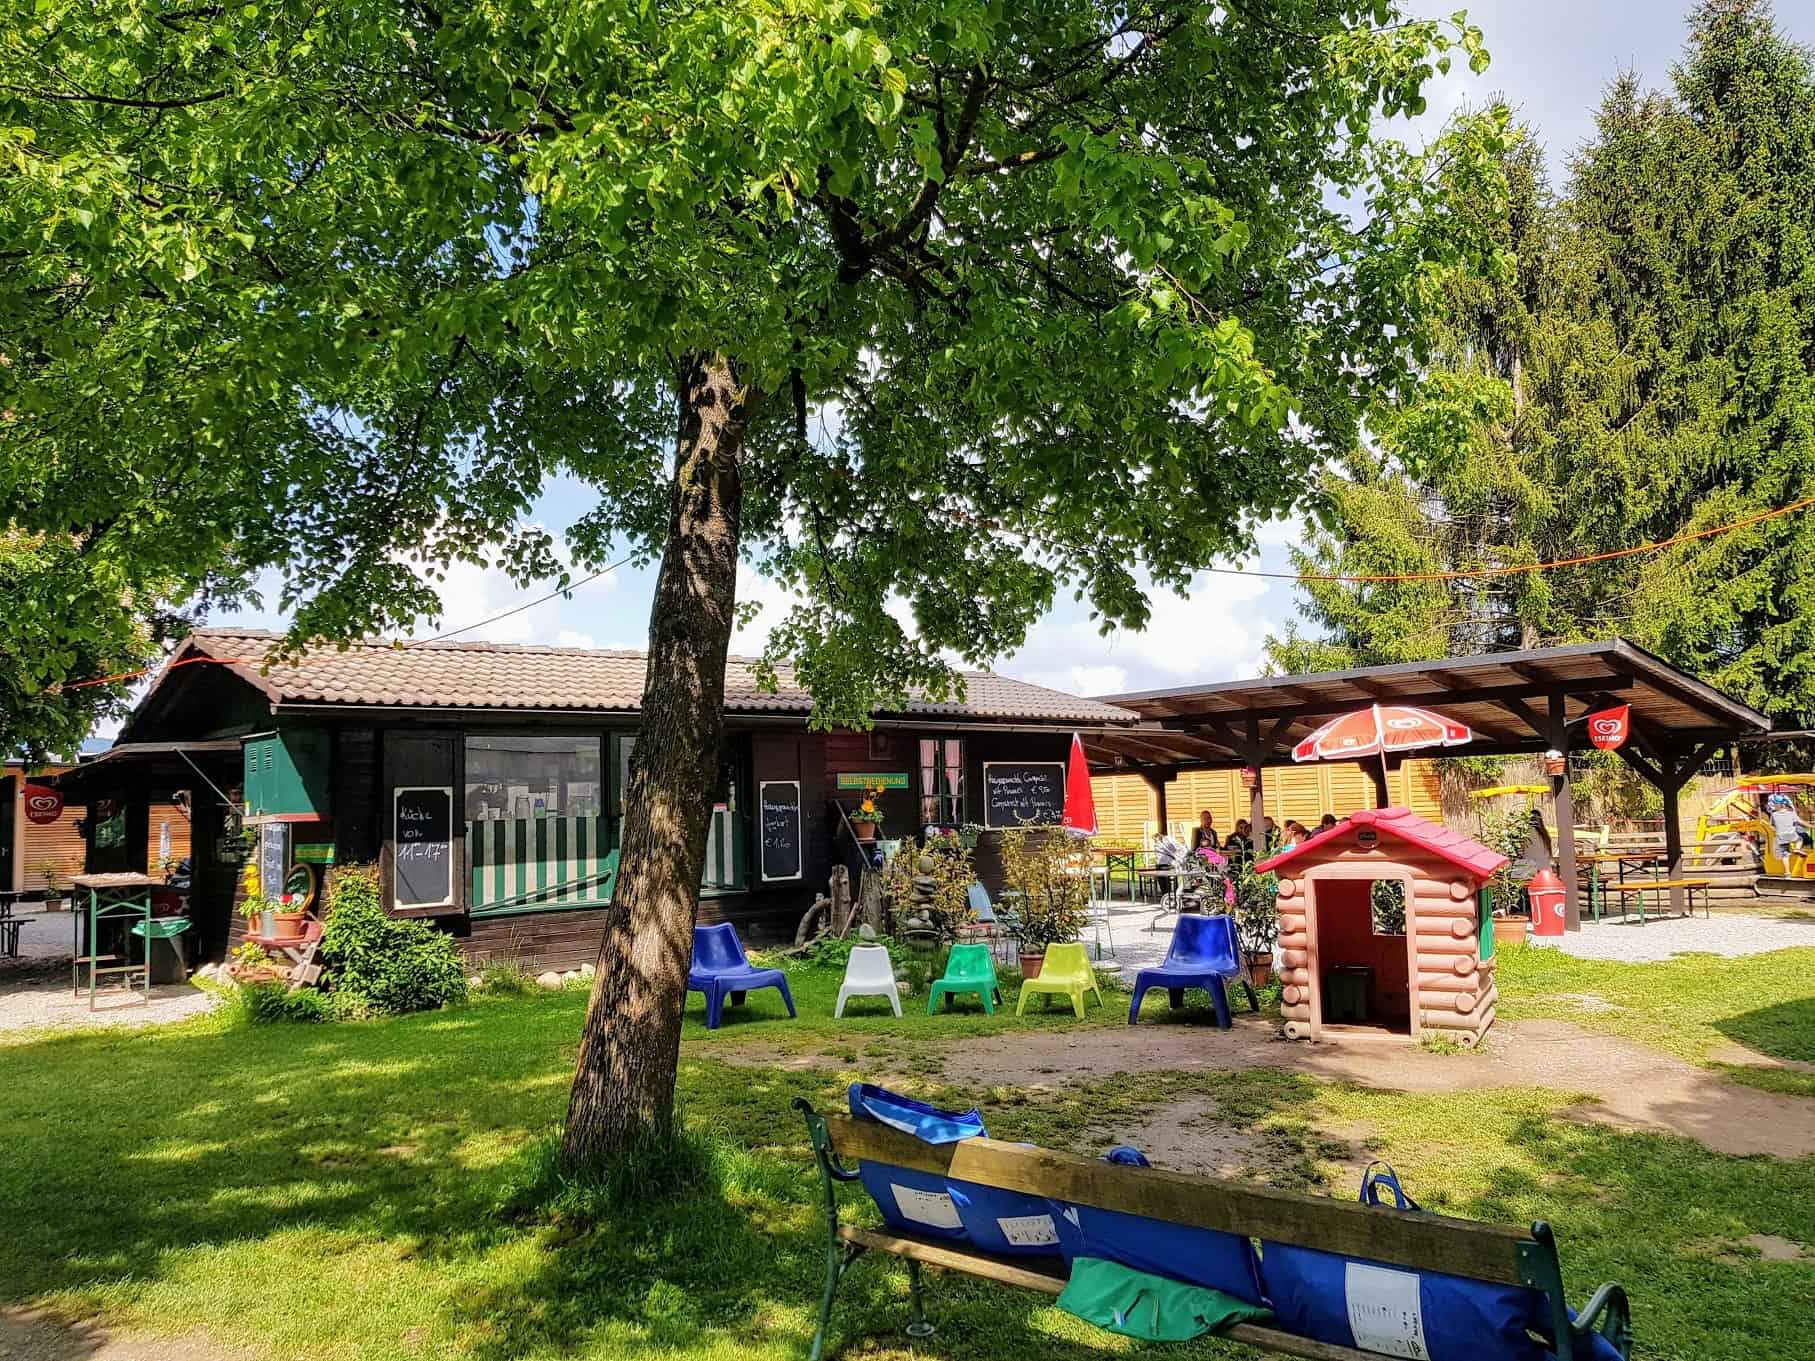 Kinderspielplatz im Tierpark Rosegg - Kärntens größter Tierpark